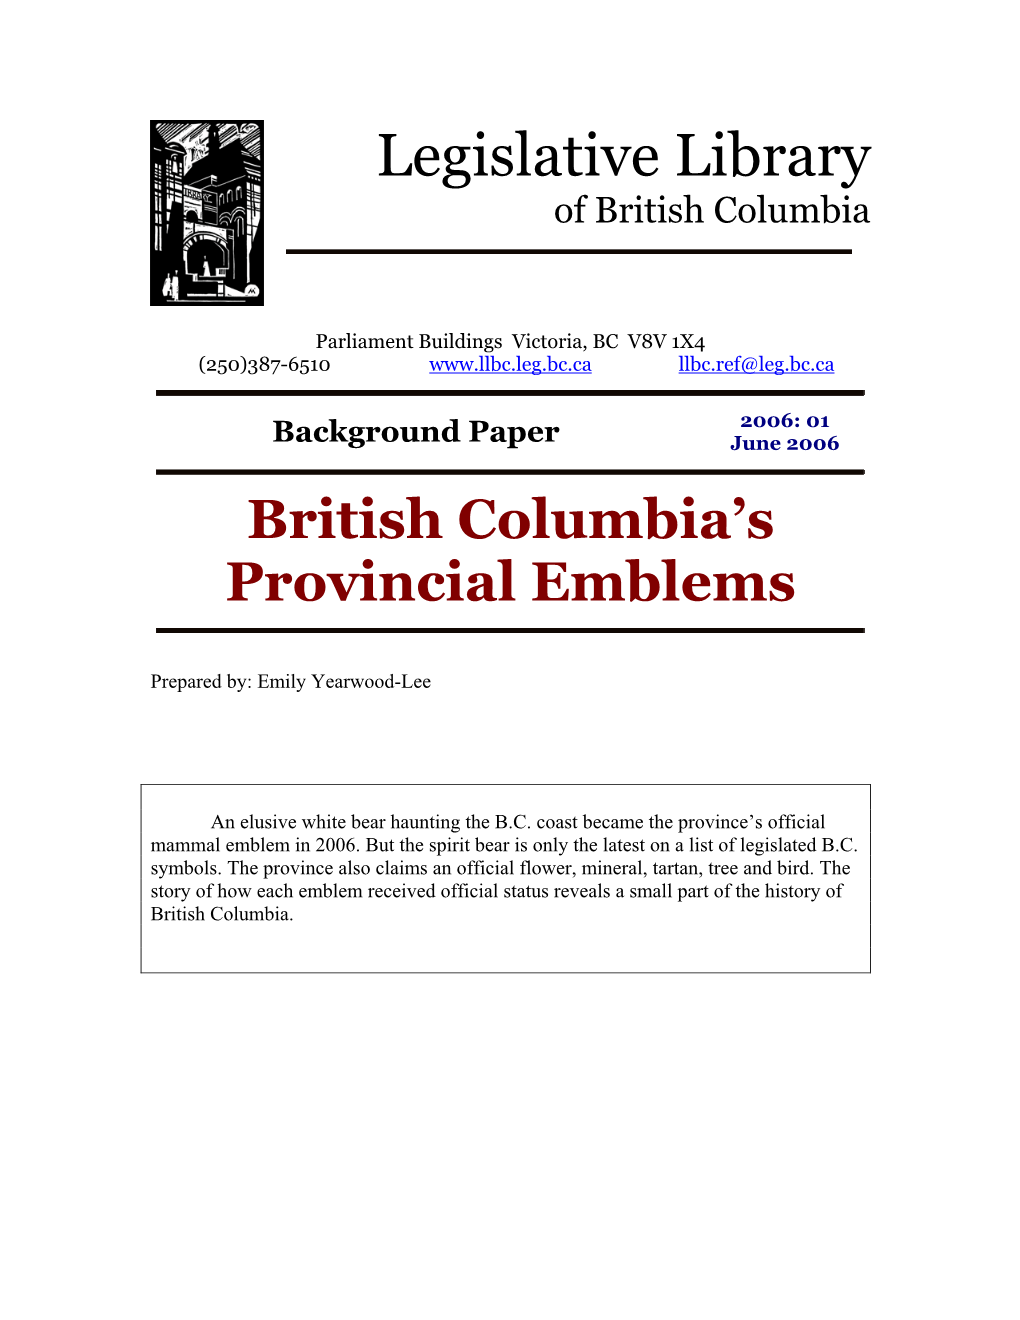 British Columbia's Provincial Emblems